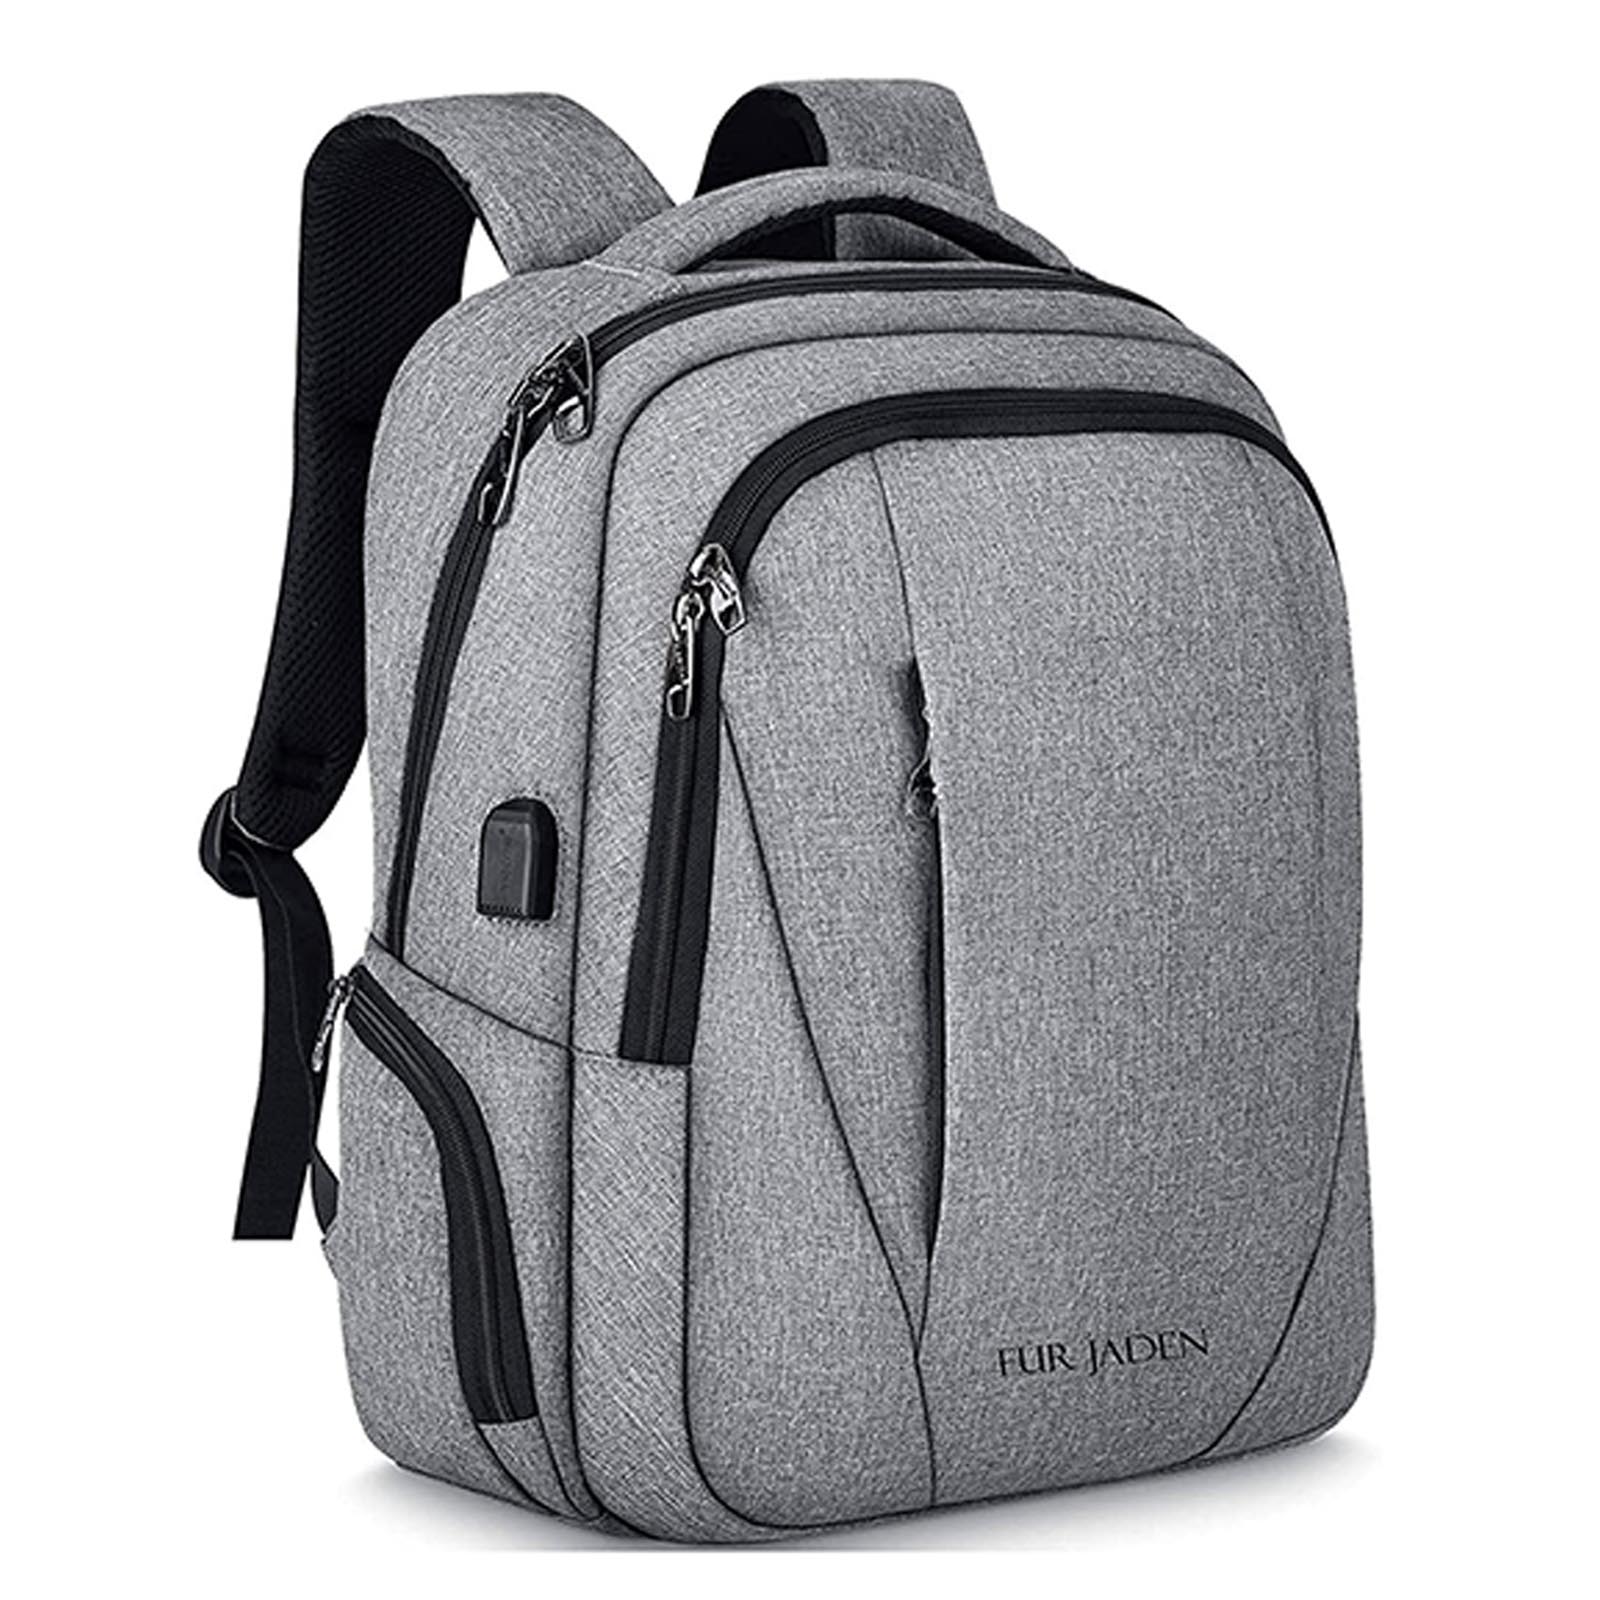 Targus Laptop Backpack | Find Your Professional Backpack Online – Targus AP